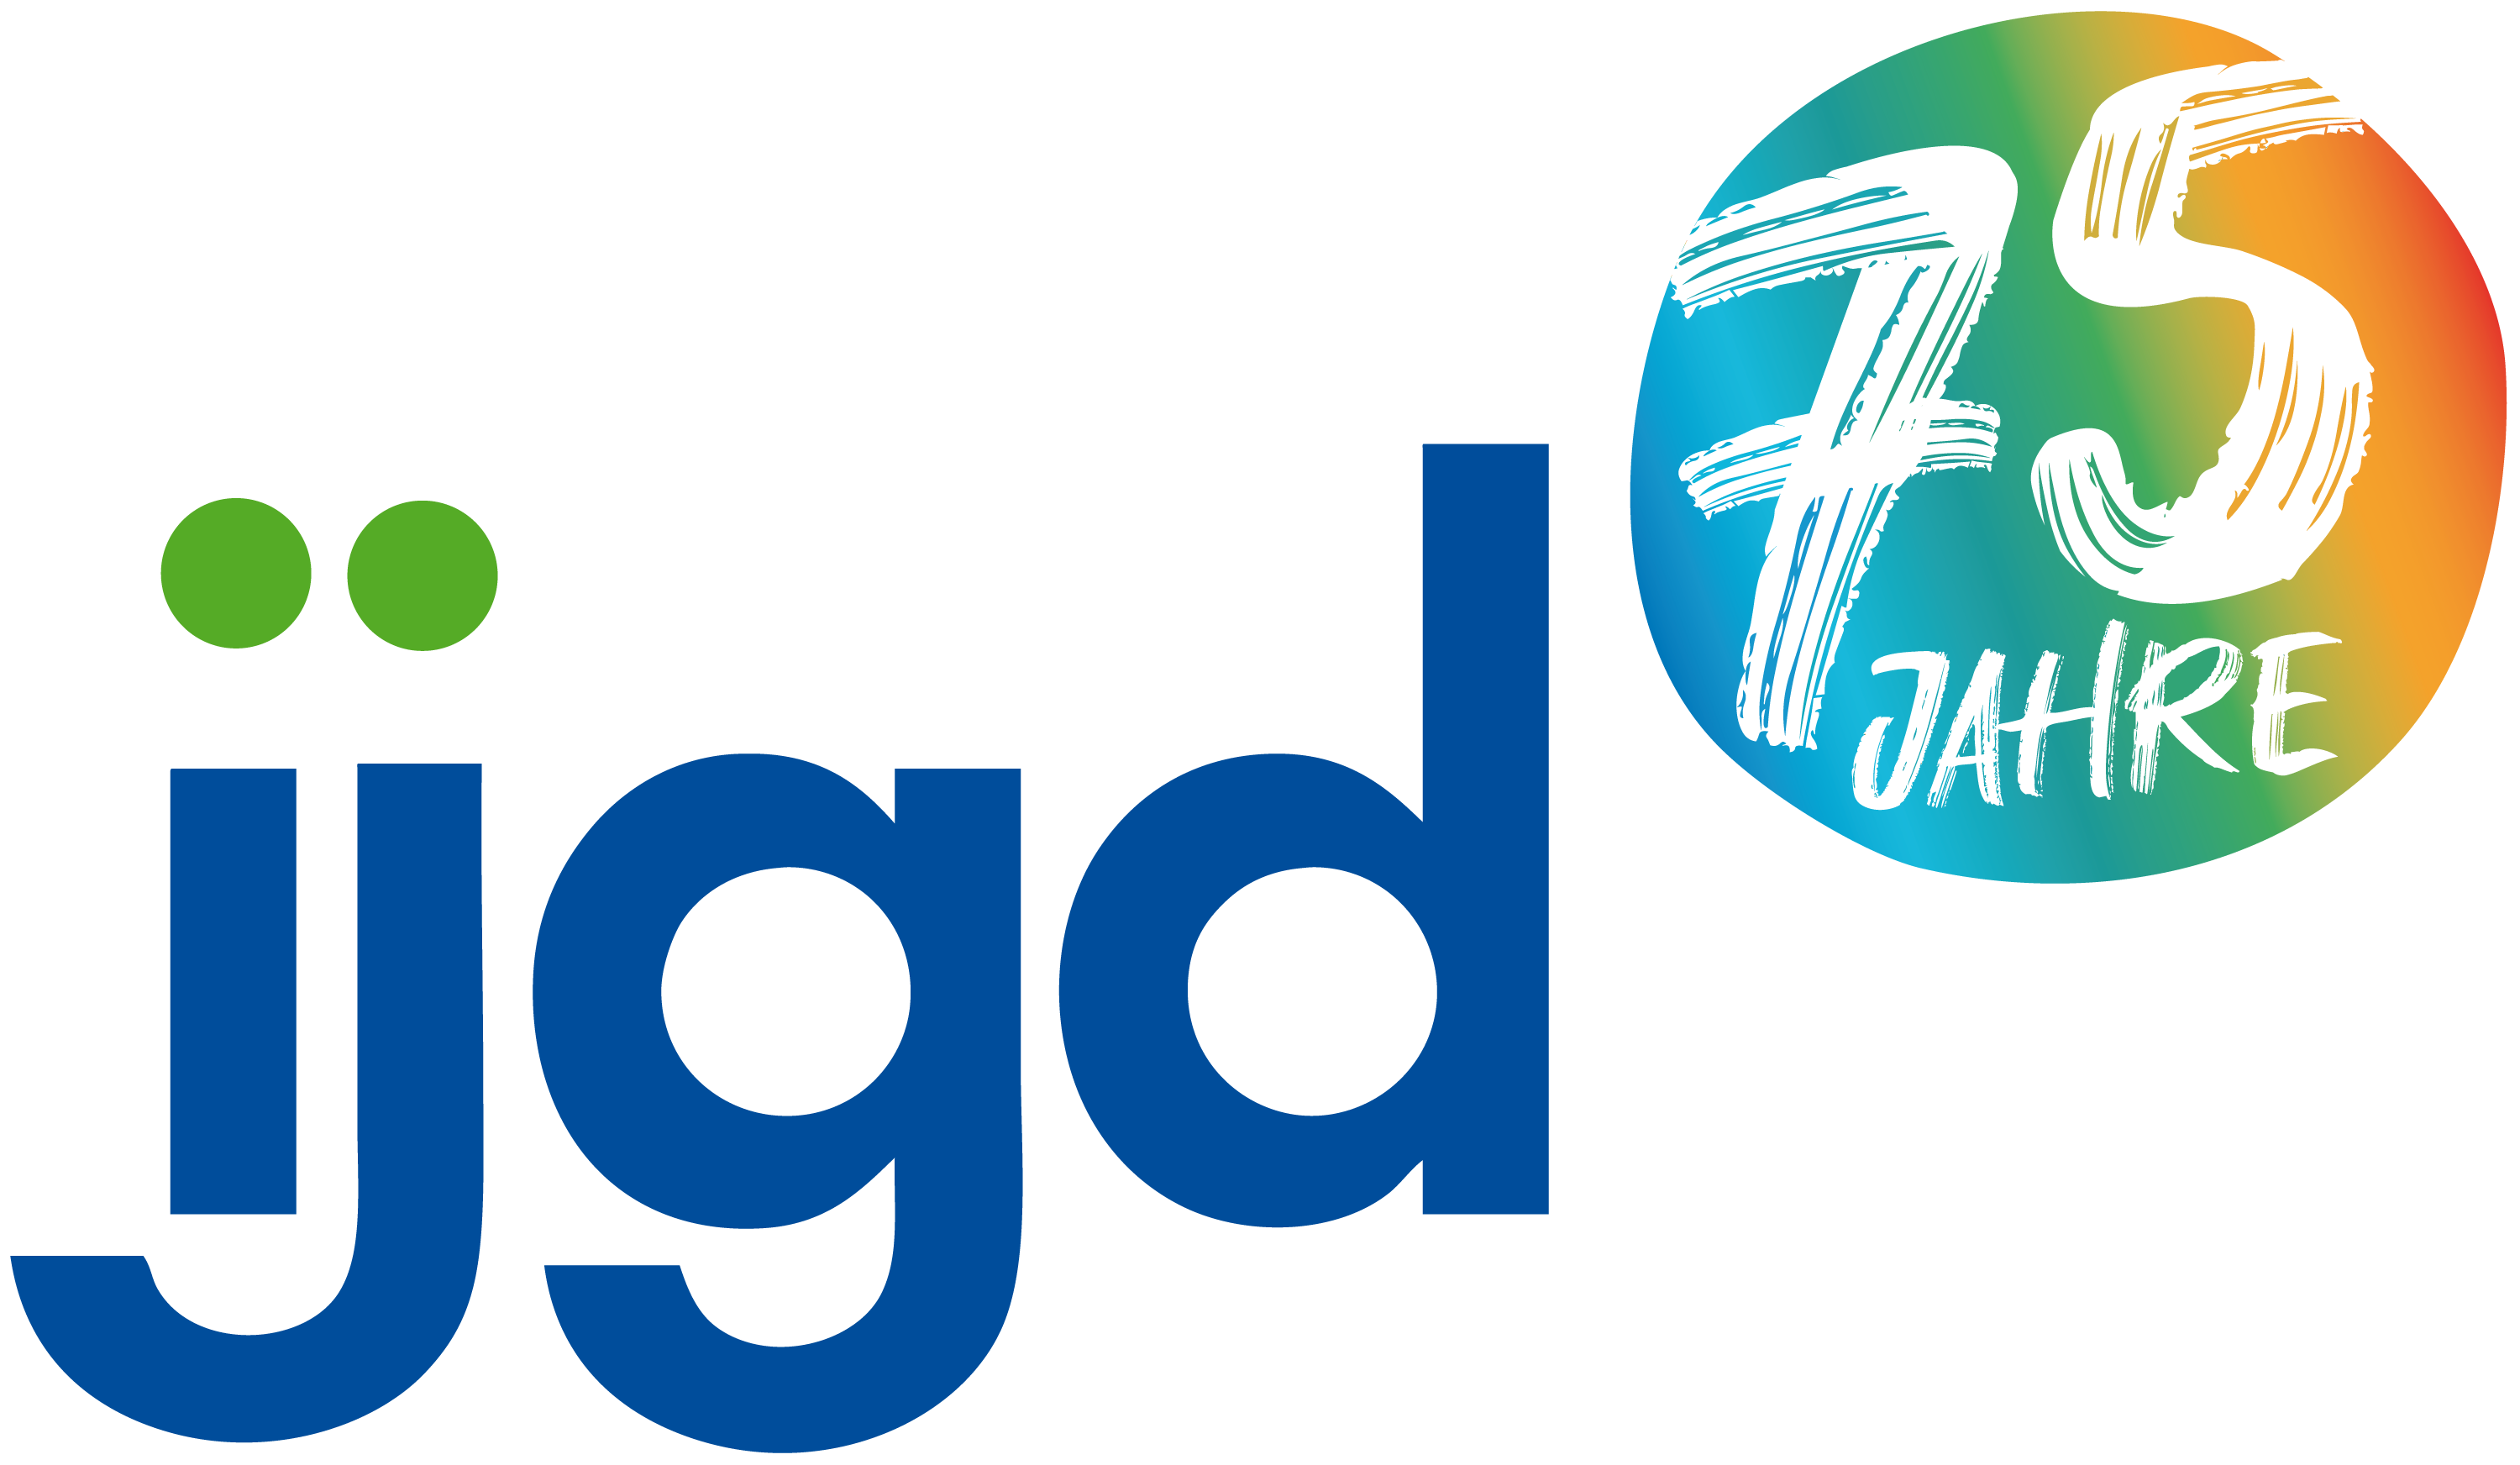 Ijgd75 Logo Verlauf Rgb Kopie Kopie Kopie.png